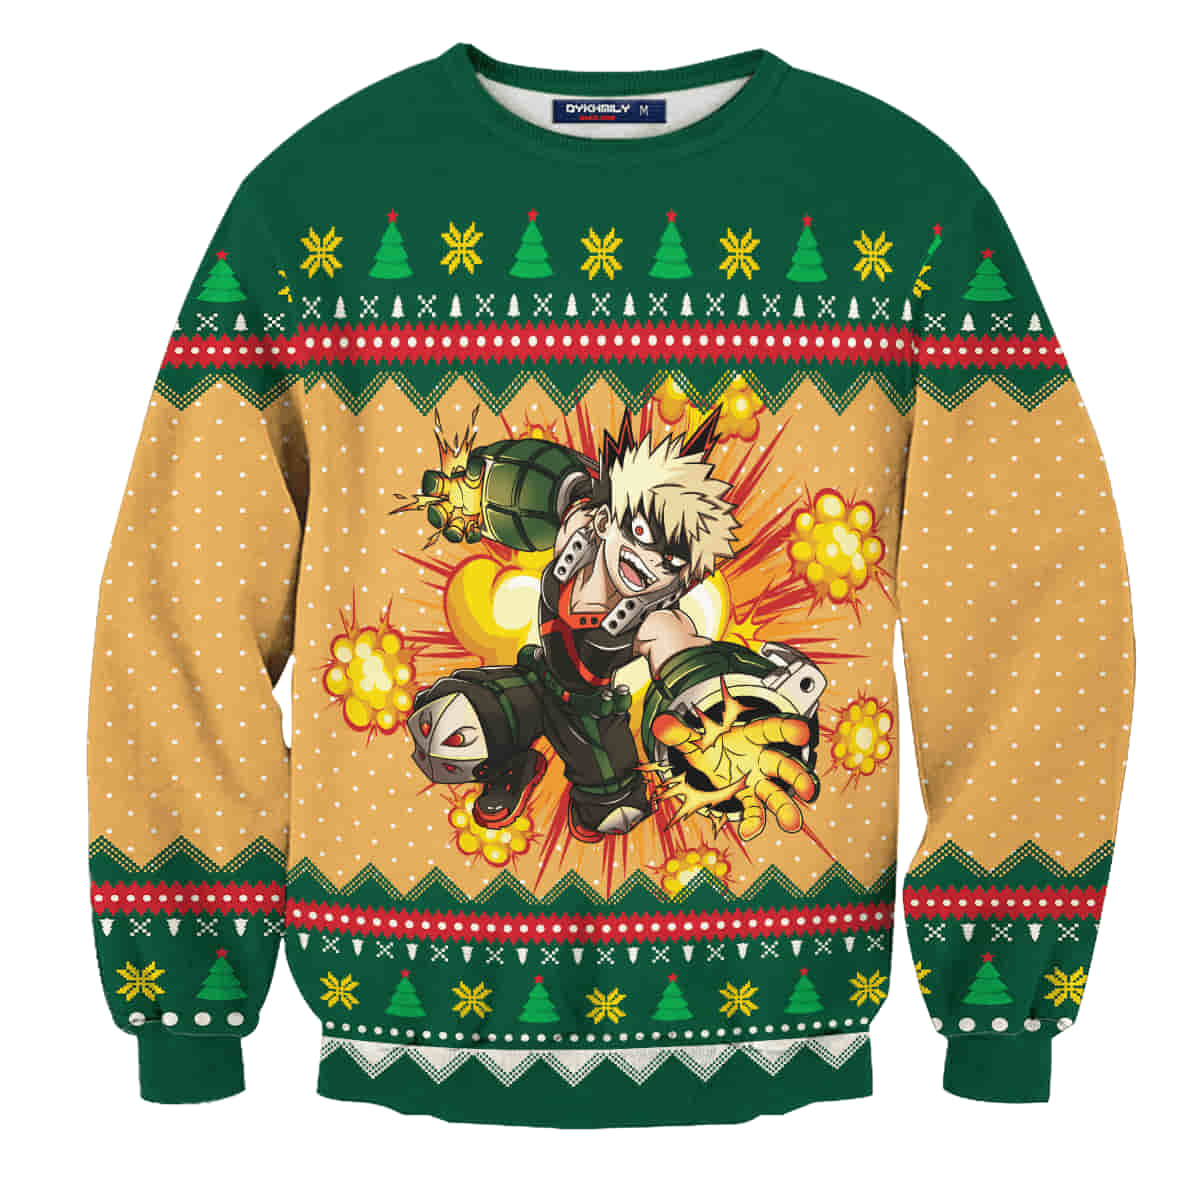 Katsuki Bakugou Wool Knitted Sweater, My Hero Academia Christmas 3D Sweater